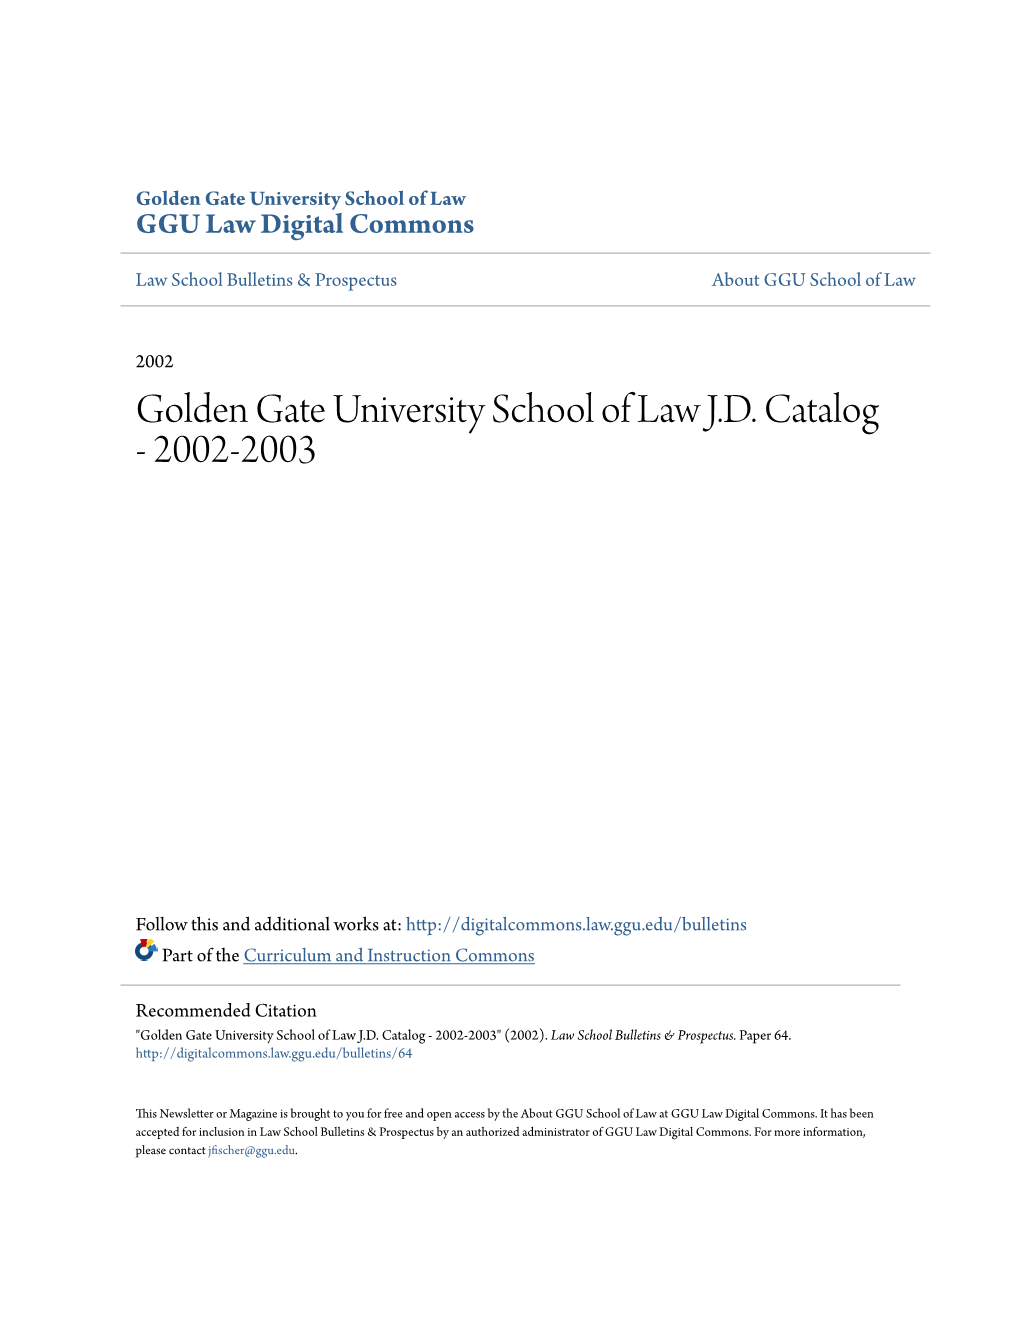 Golden Gate University School of Law JD Catalog